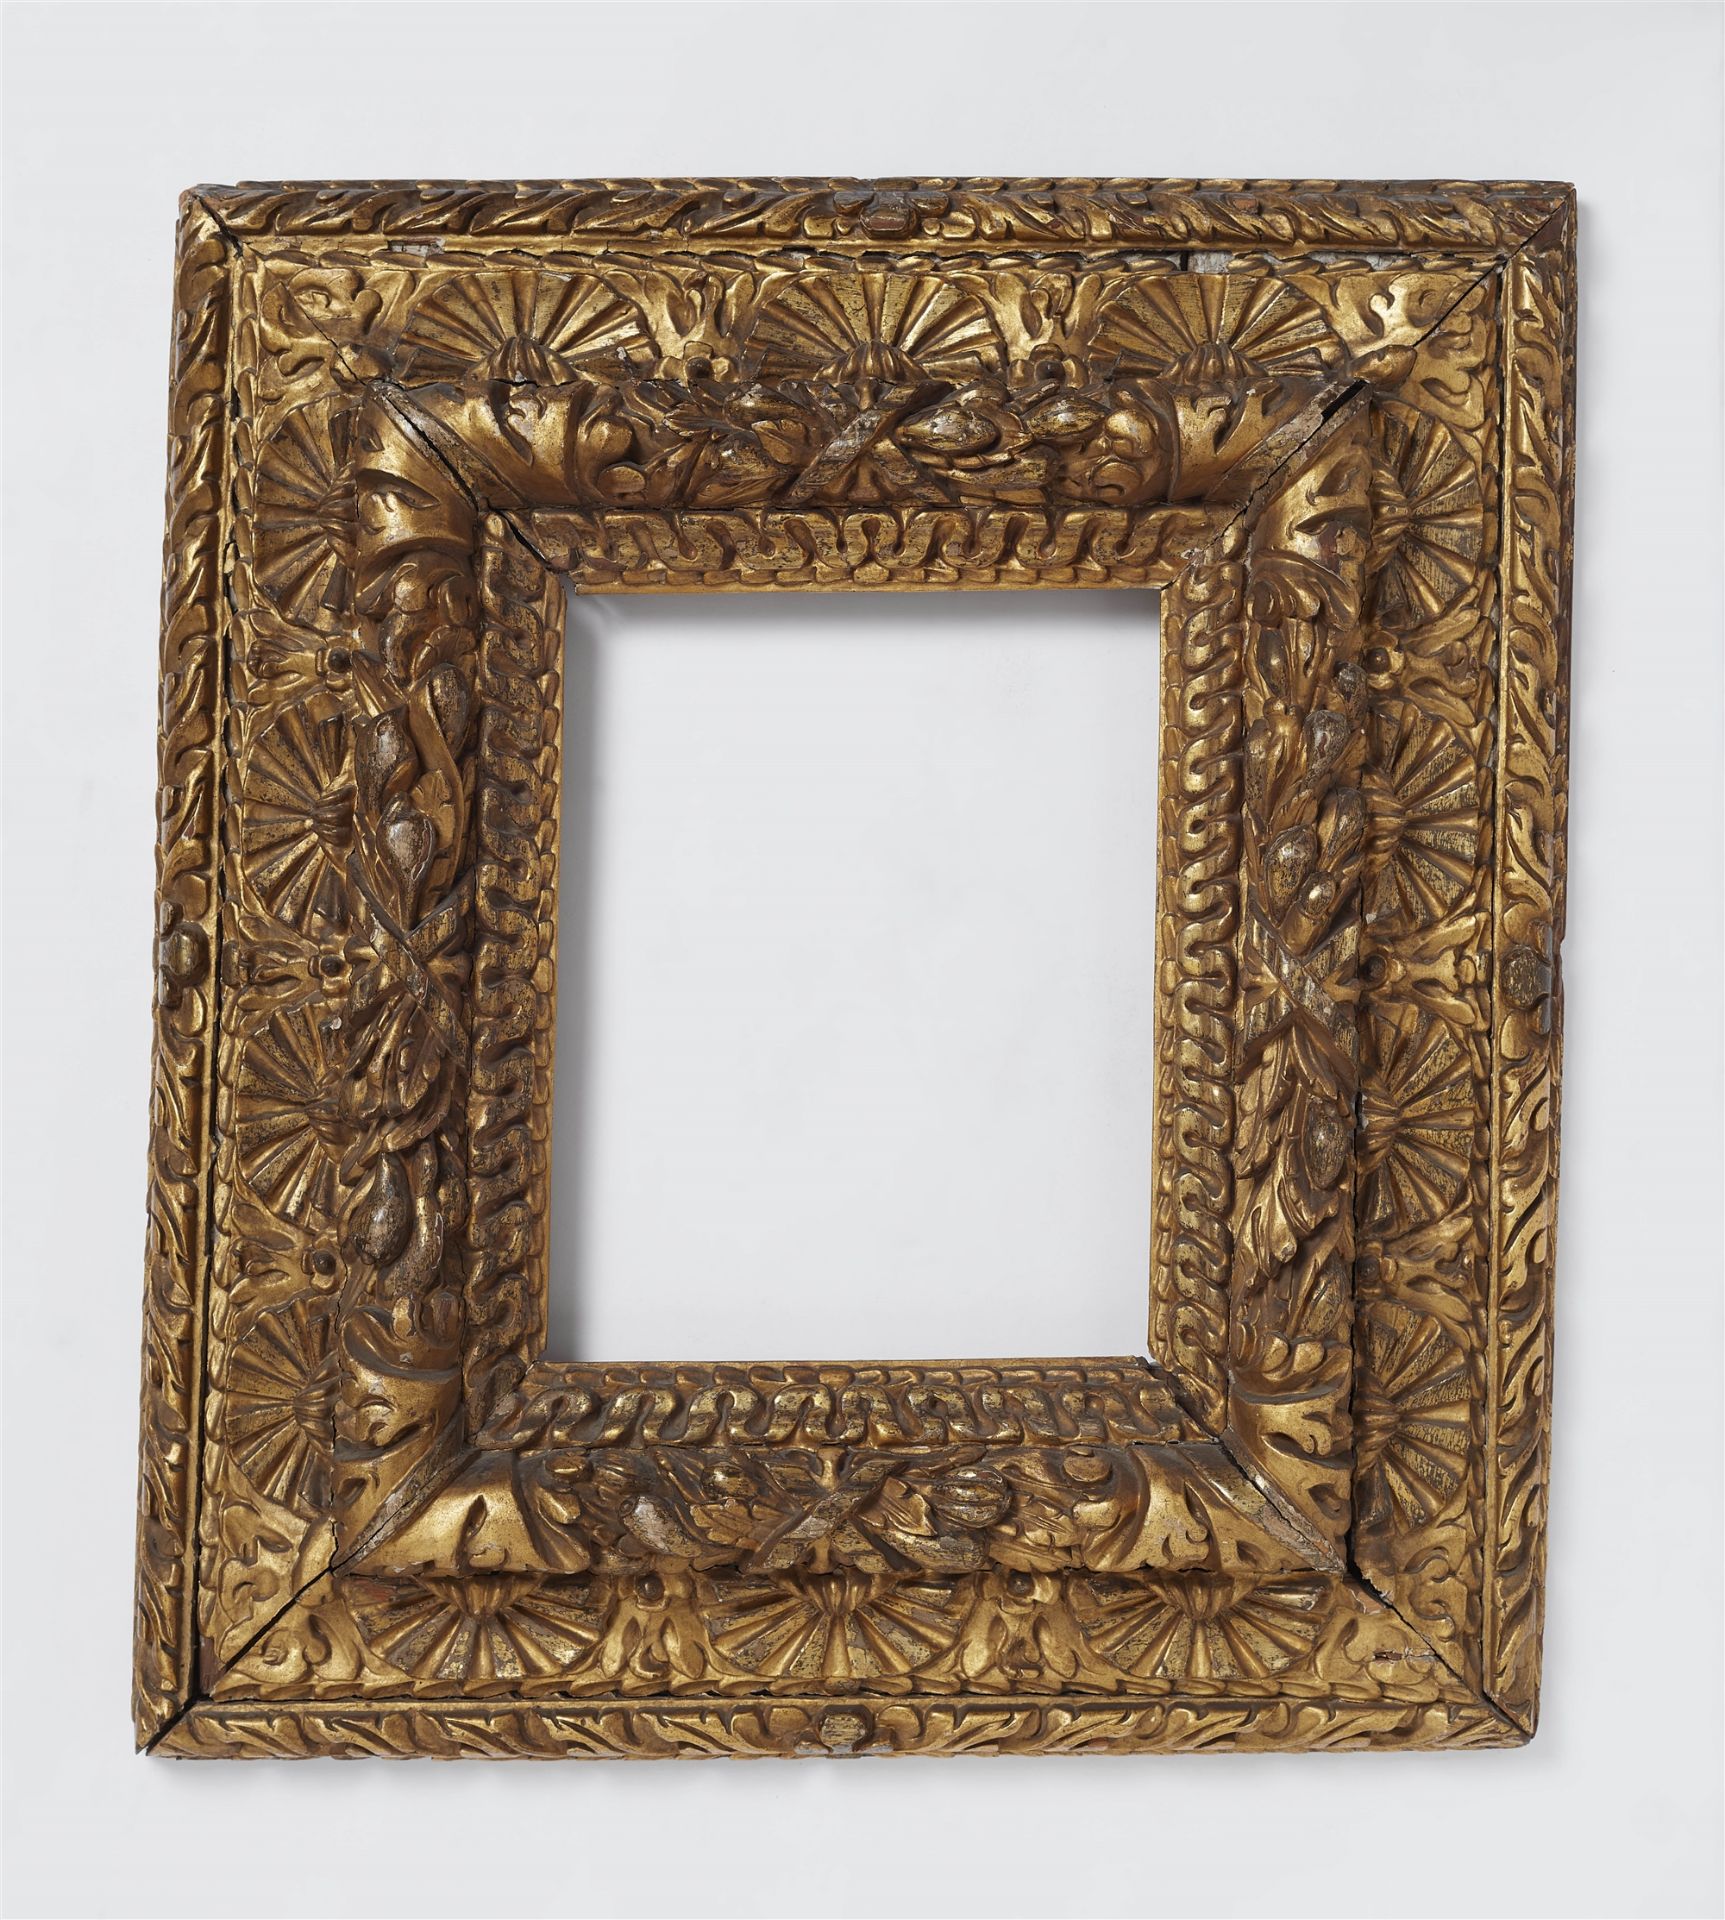 A Spanish giltwood baroque frame